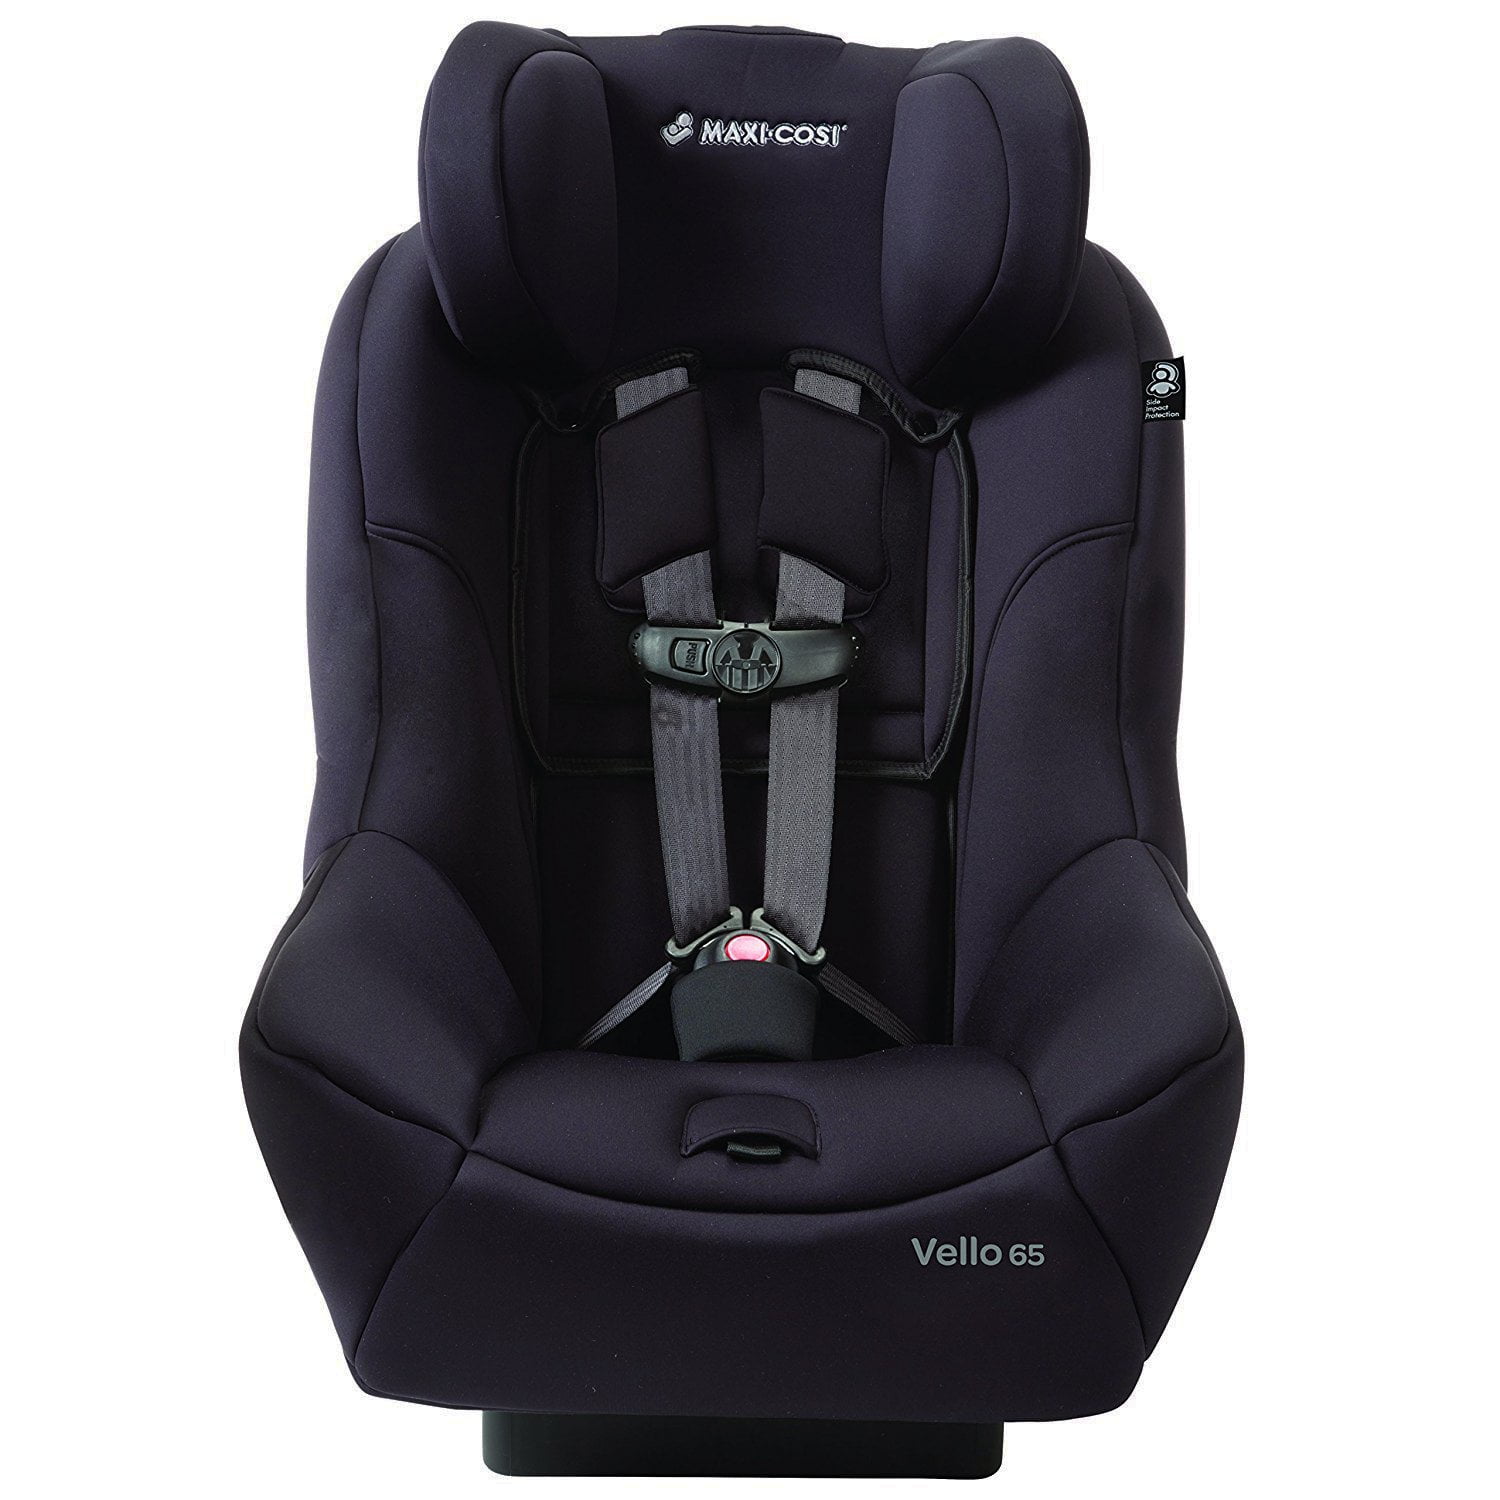 burlington baby car seats